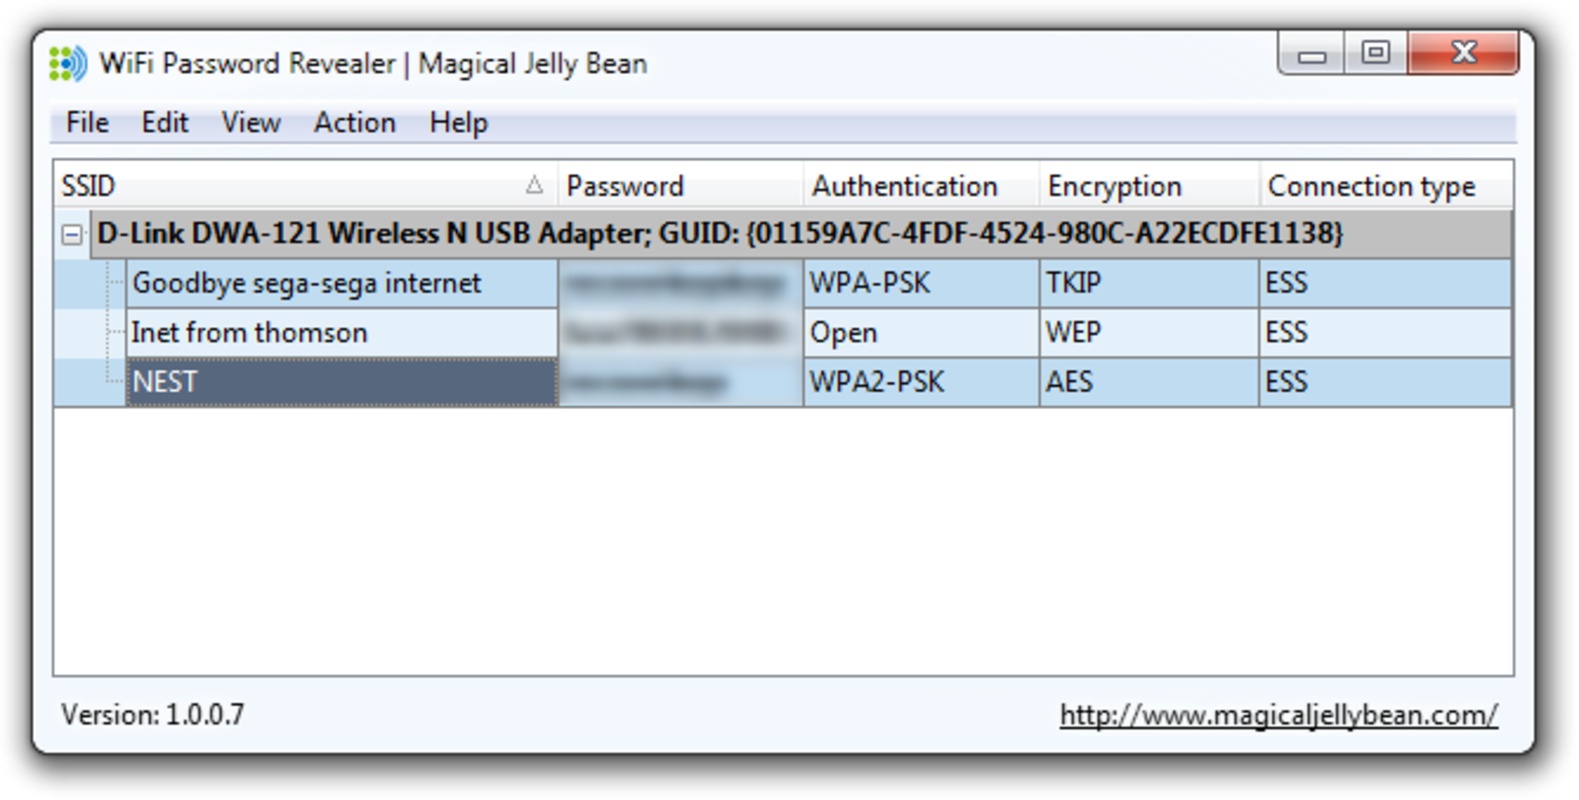 WiFi password revealer 1.0.0.13 feature